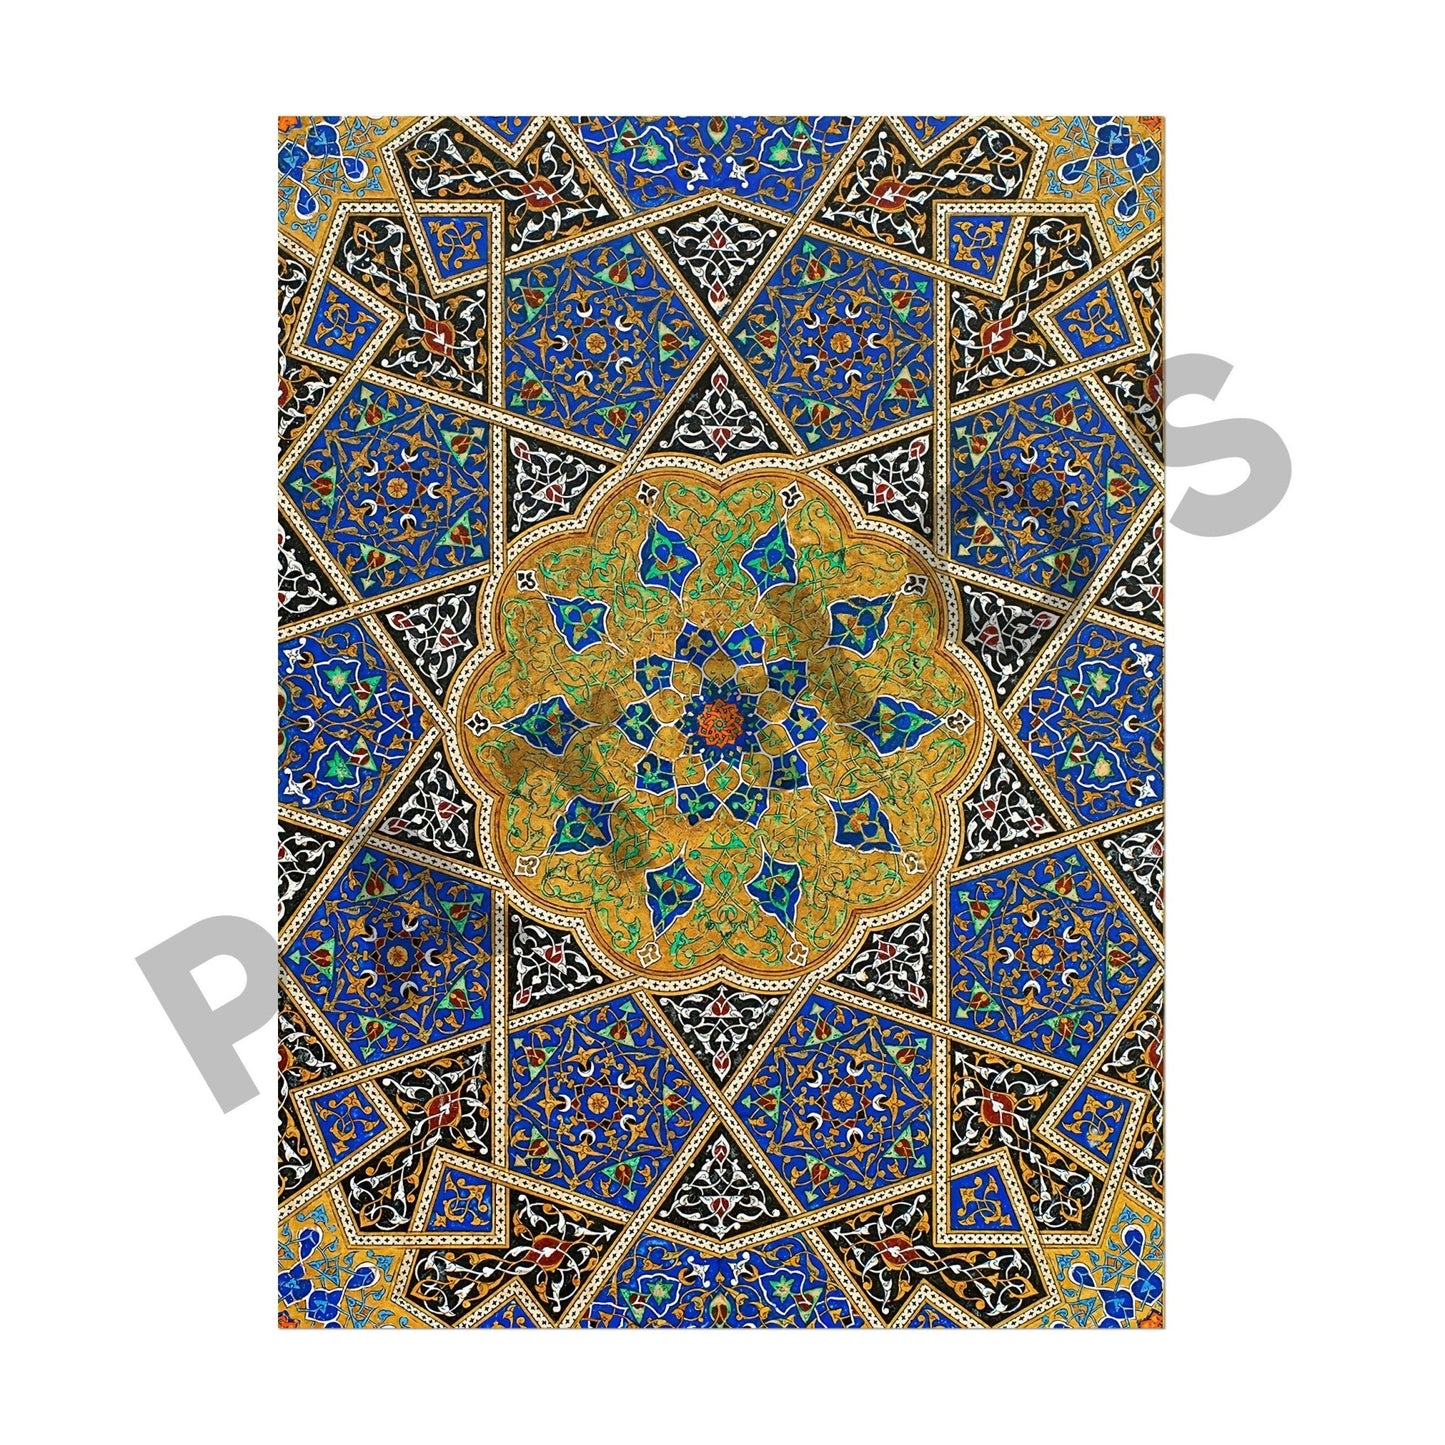 Set of 3 - Traditional Persian Pattern Art - Pathos Studio - Posters, Prints, & Visual Artwork